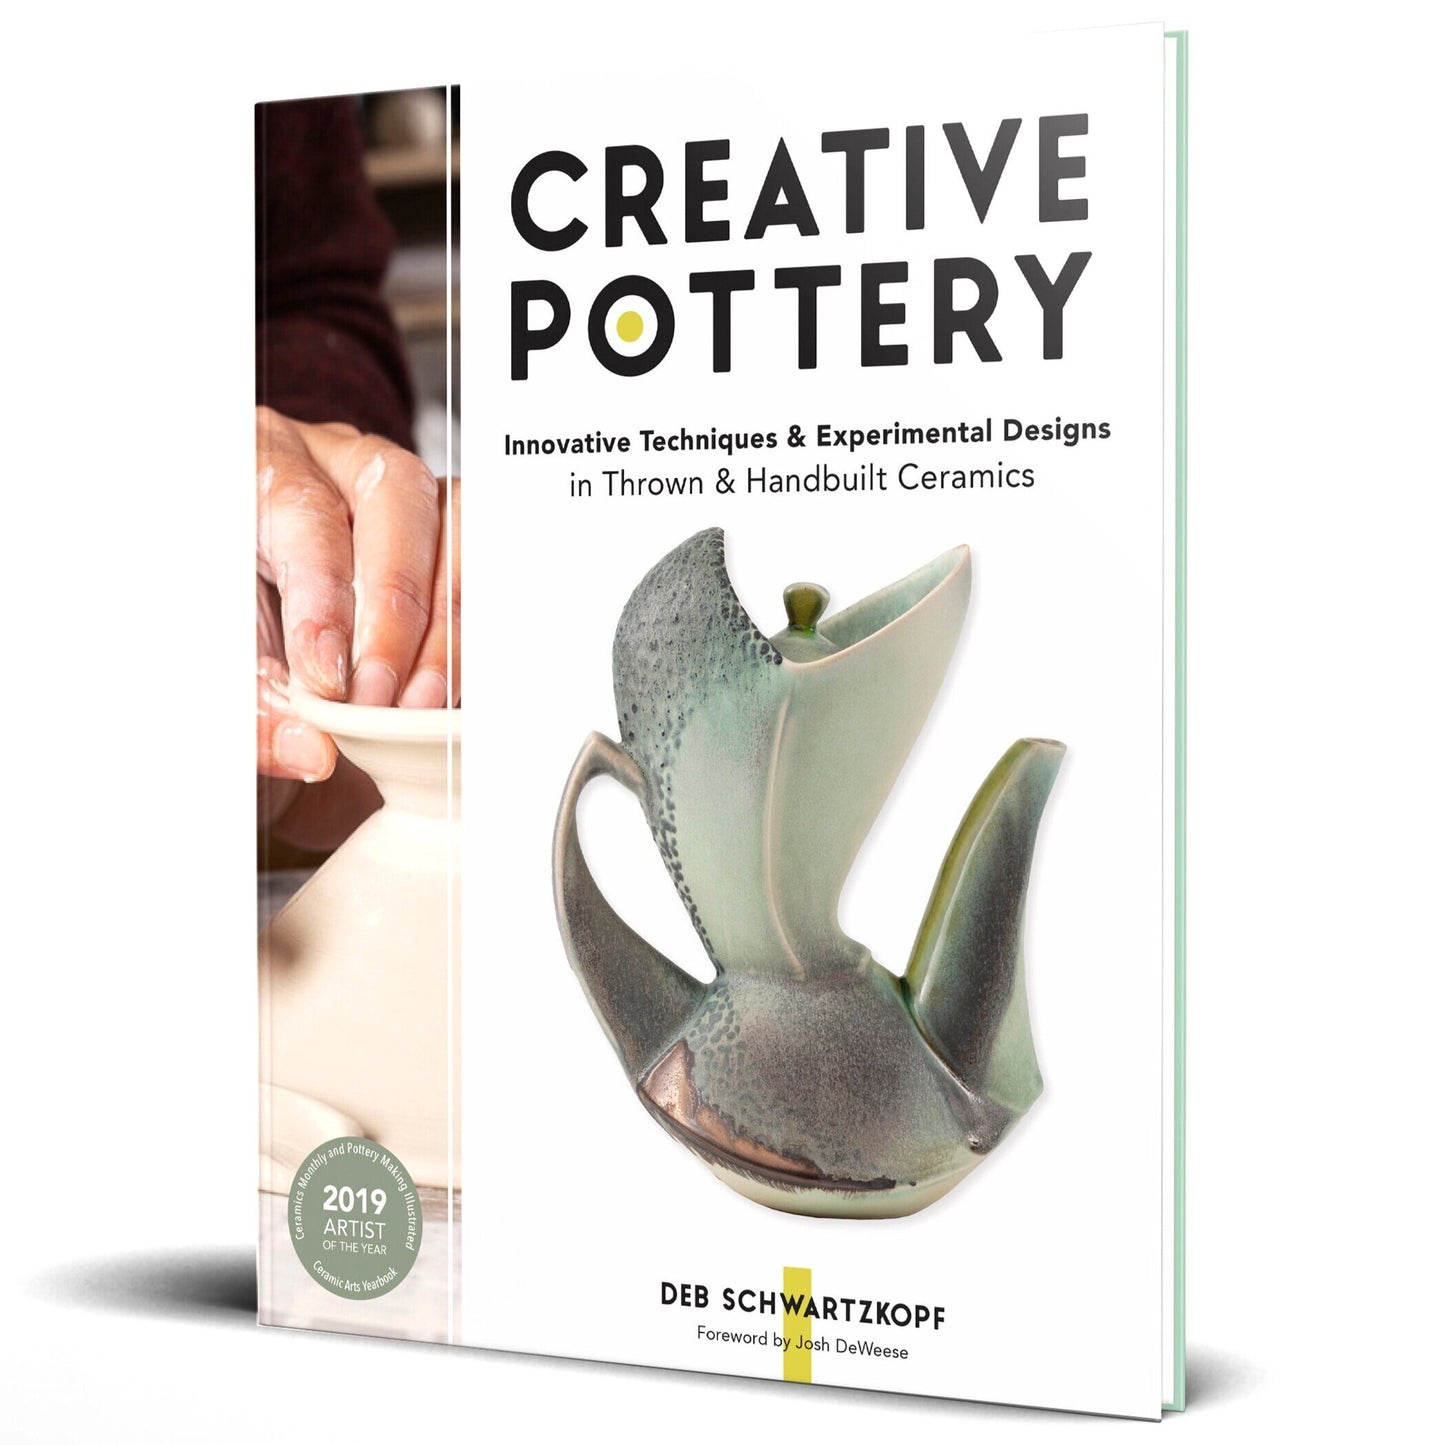 Creative Pottery by Deb Schwarzkopf